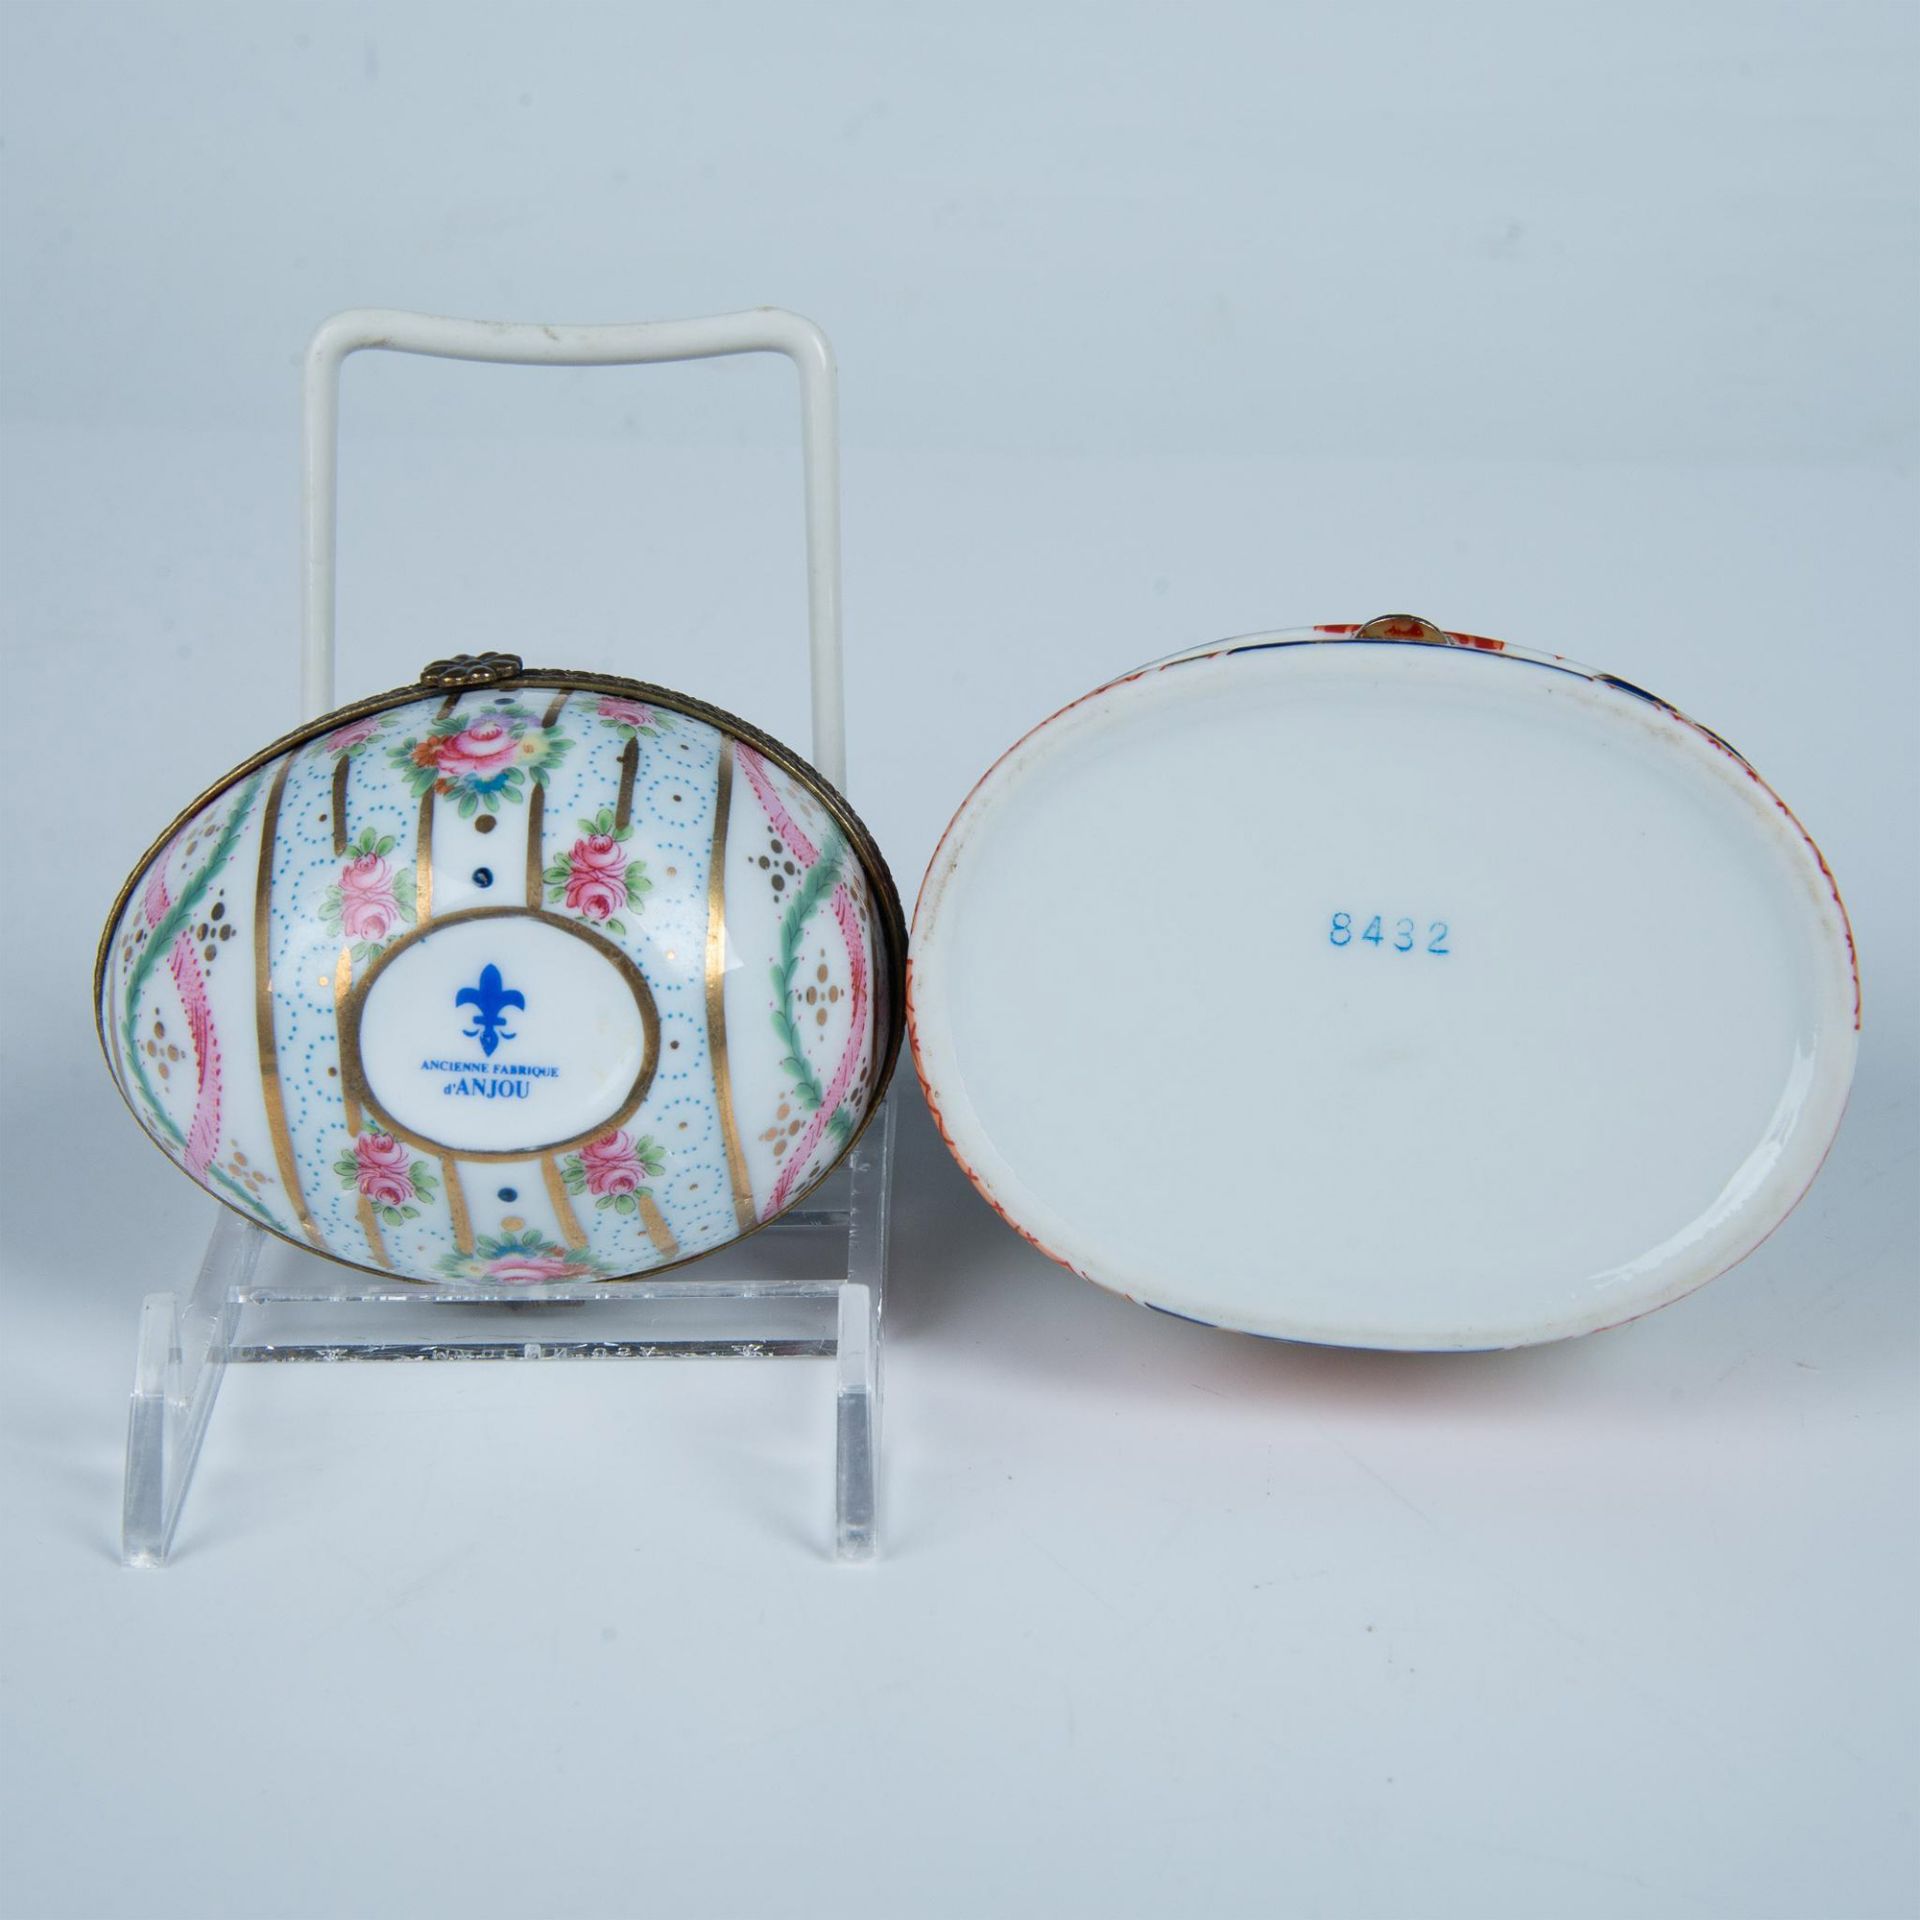 2pc Porcelain Keepsake Boxes, Sadek + Ancienne Fabrique - Image 6 of 6